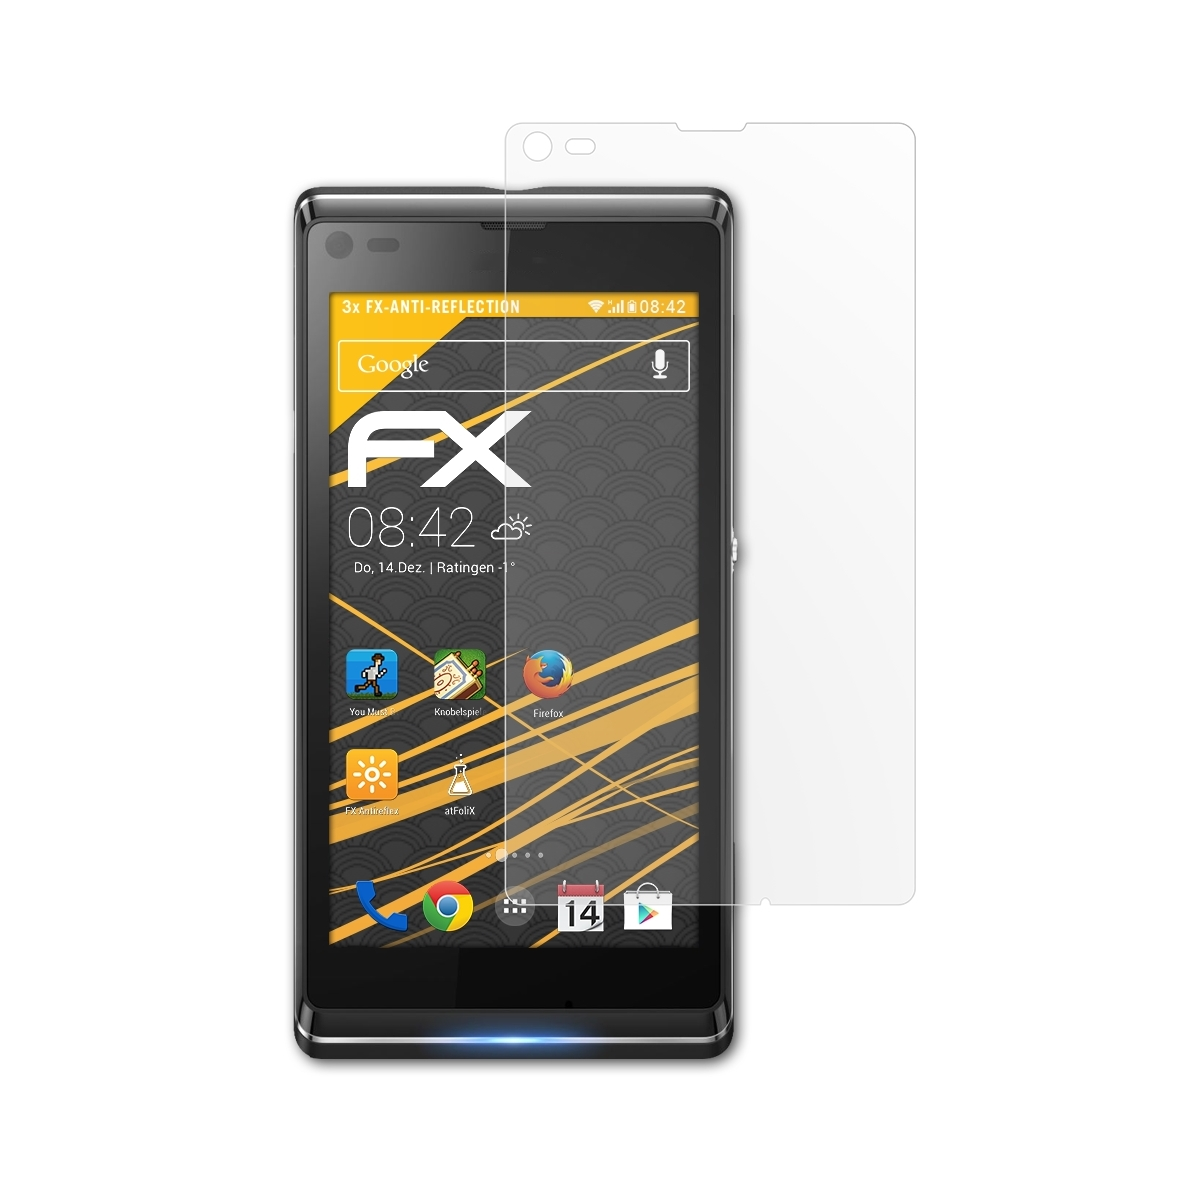 Xperia L) Sony 3x ATFOLIX FX-Antireflex Displayschutz(für